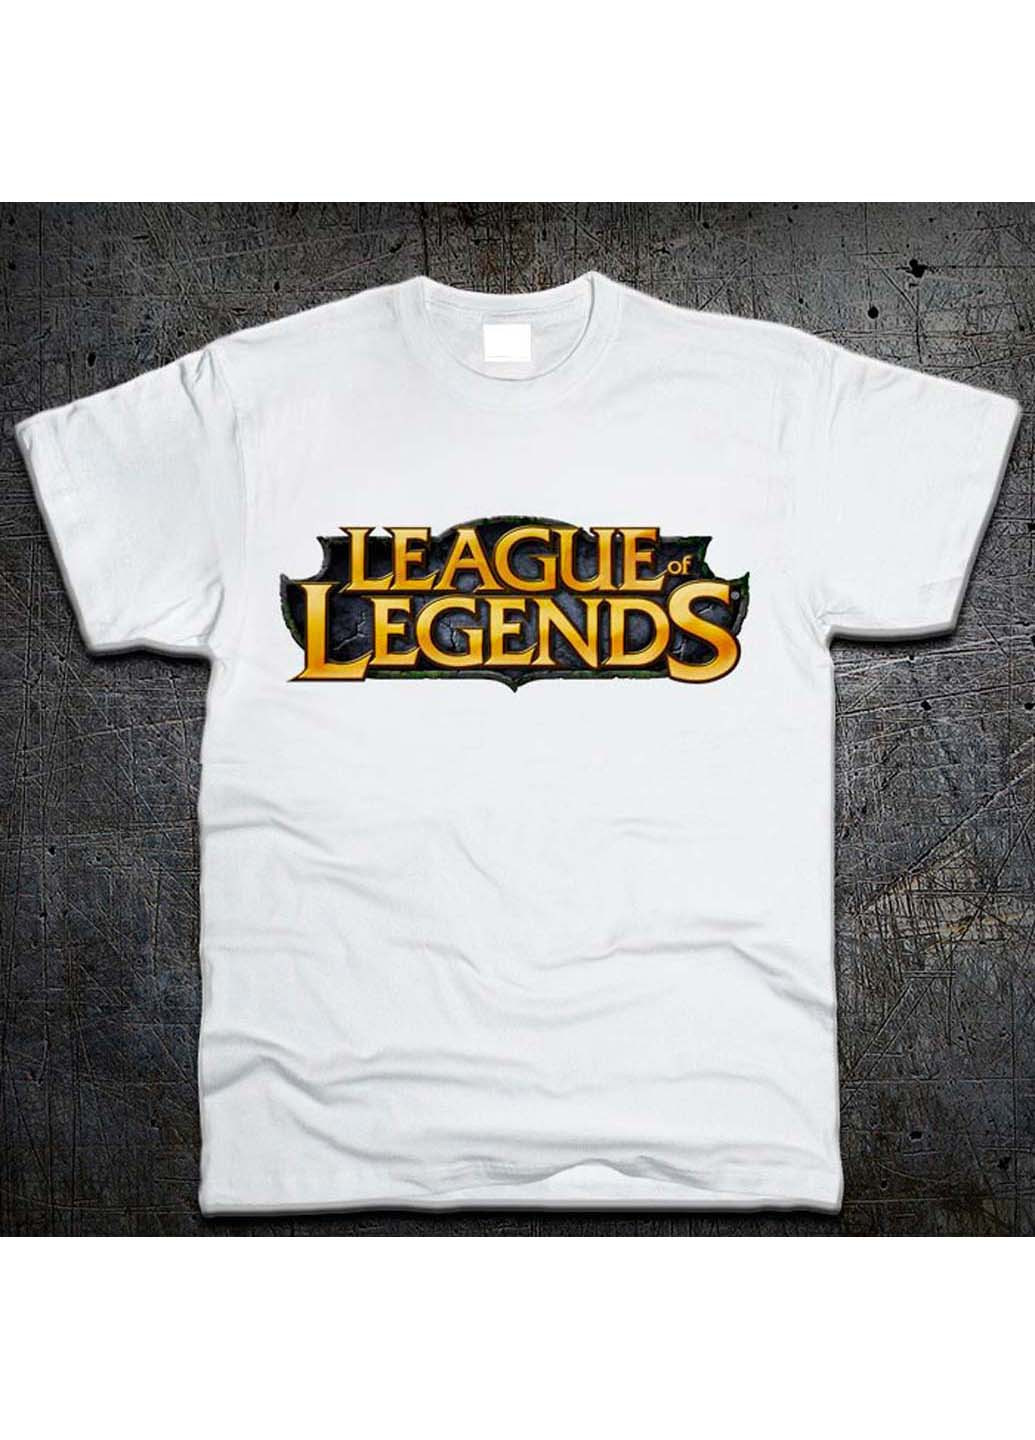 Белая футболка Fruit of the Loom Логотип Лига Легенд Logo League of Legends